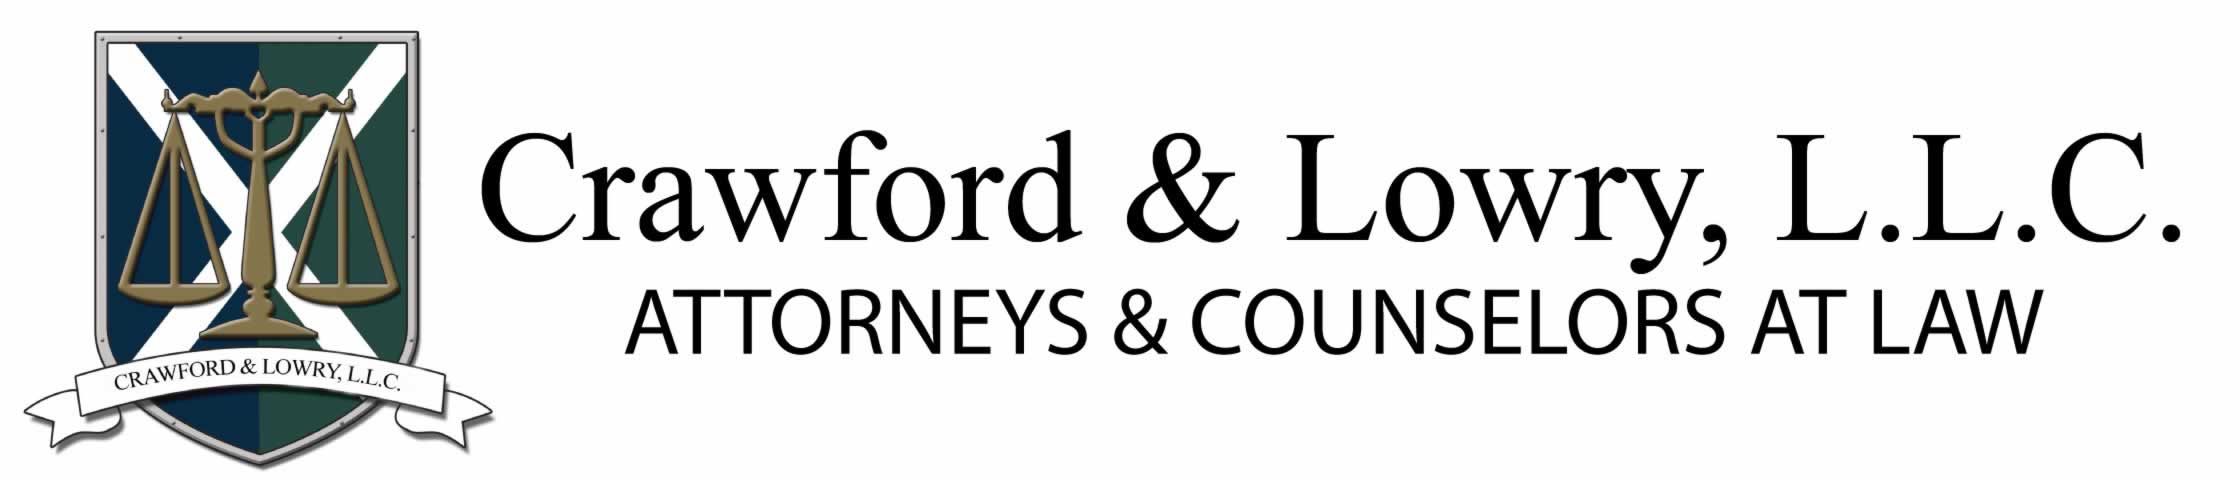 Crawford & Lowry, L.L.C. - Attorneys